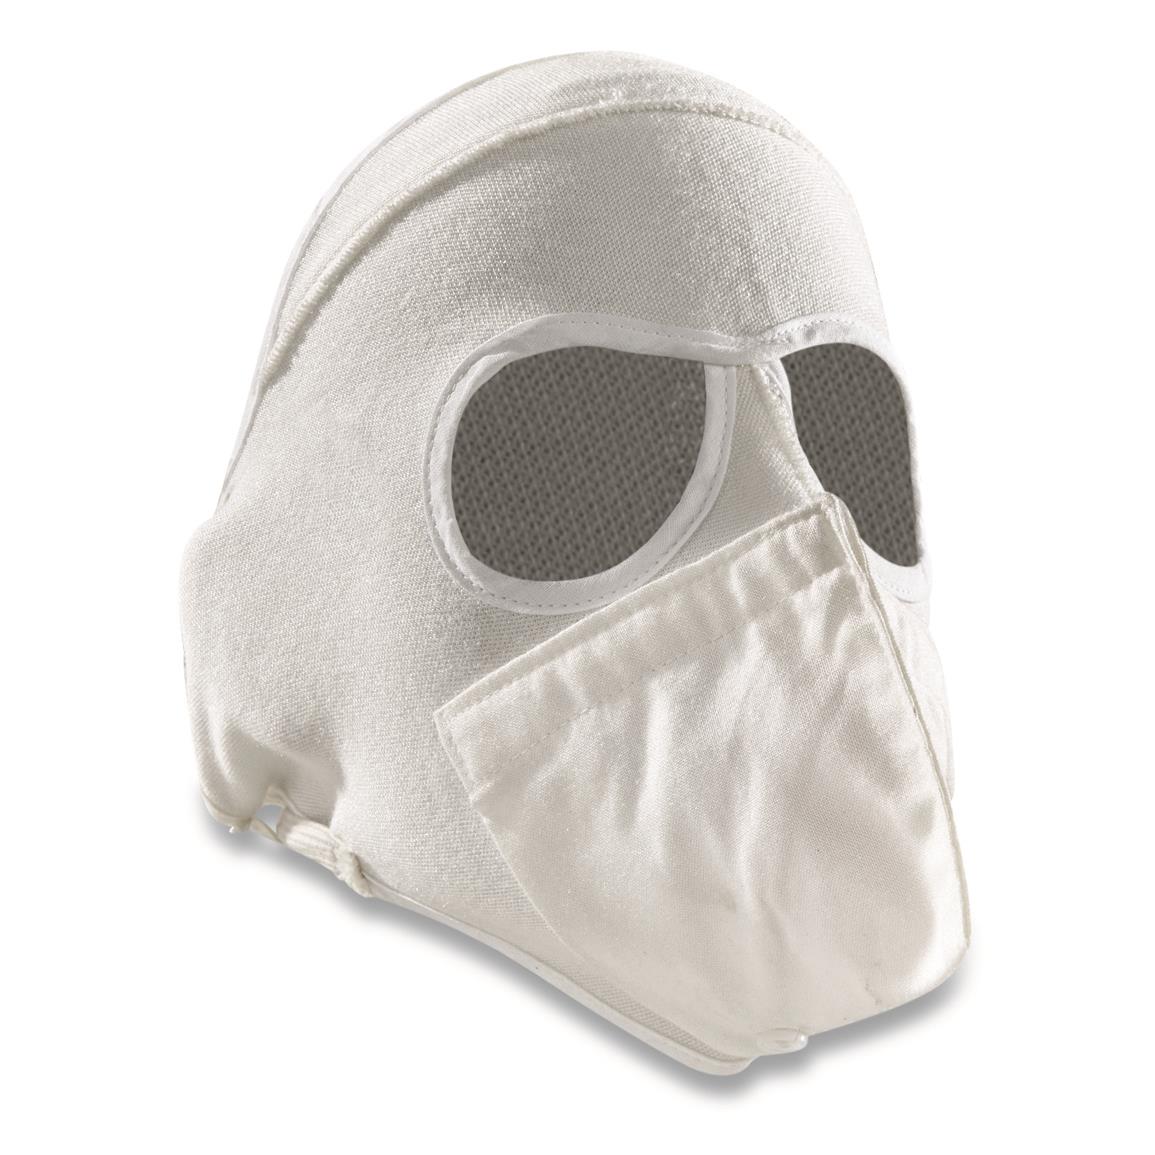 British Military Surplus ECW Face Masks, 4 Pack, New